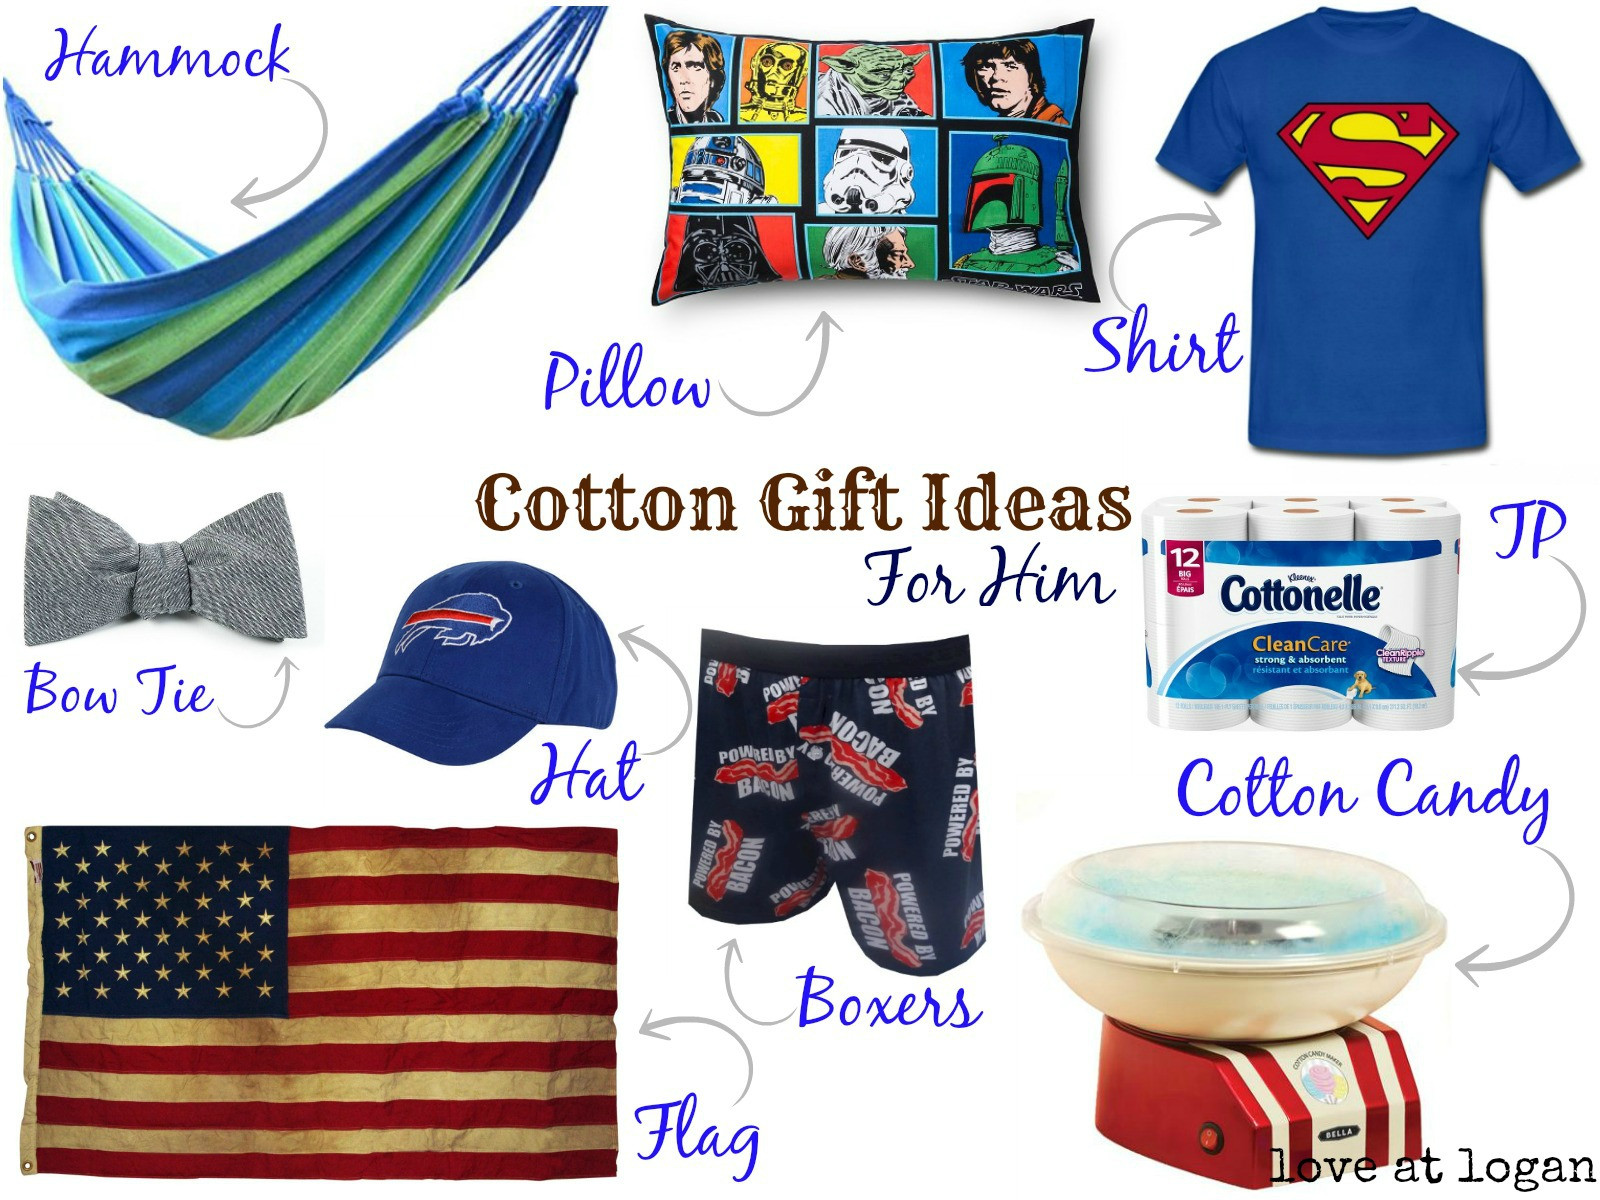 Cotton Anniversary Gift Ideas
 Love at Logan Second Anniversary Cotton Gift Ideas